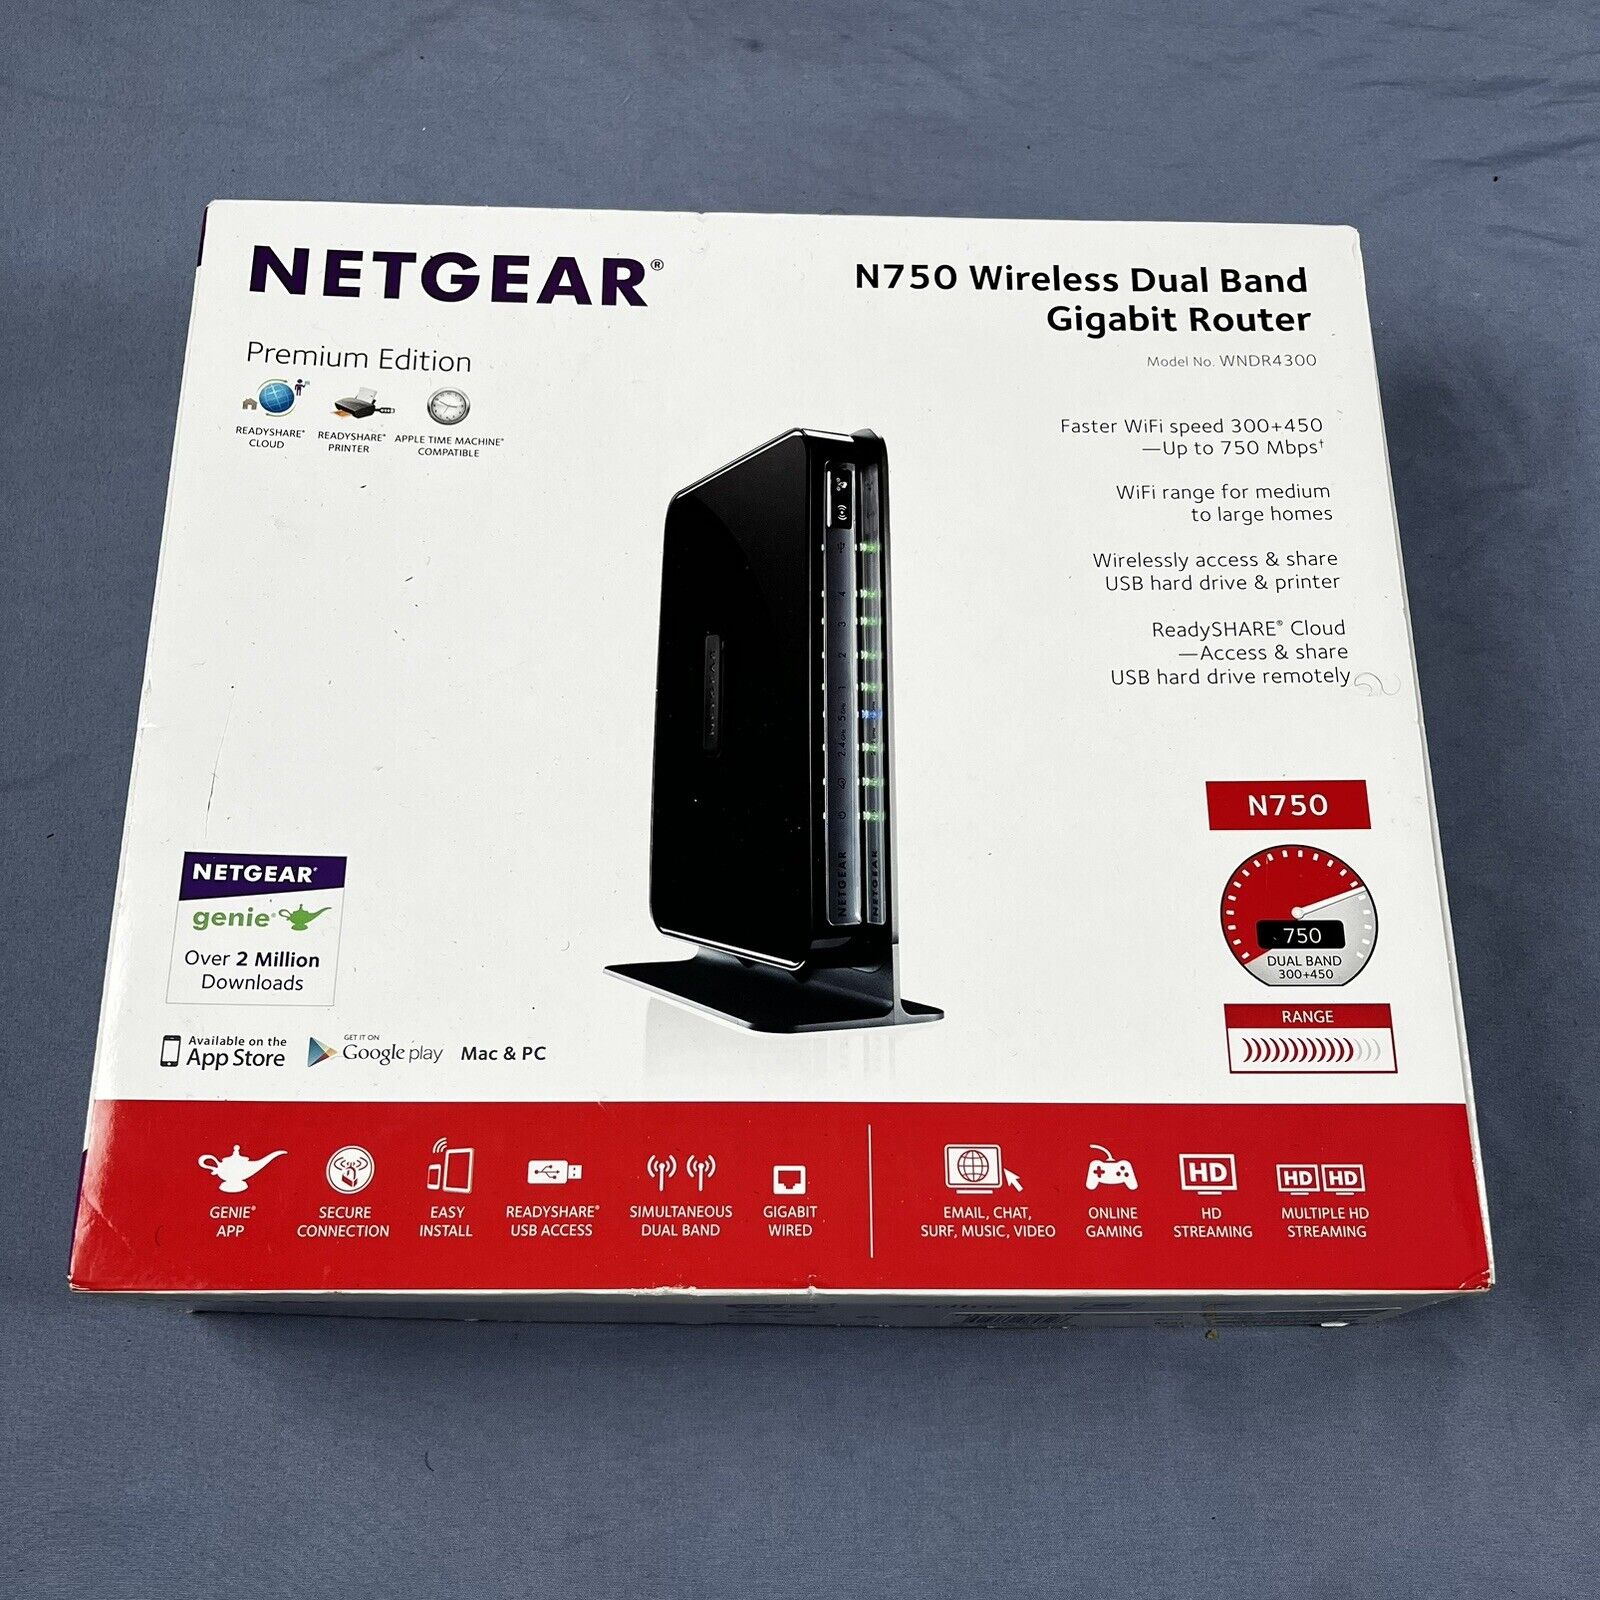 NETGEAR N750 WiFi 300+450Mbps Dual Band Gigabit Router (WNDR4300)